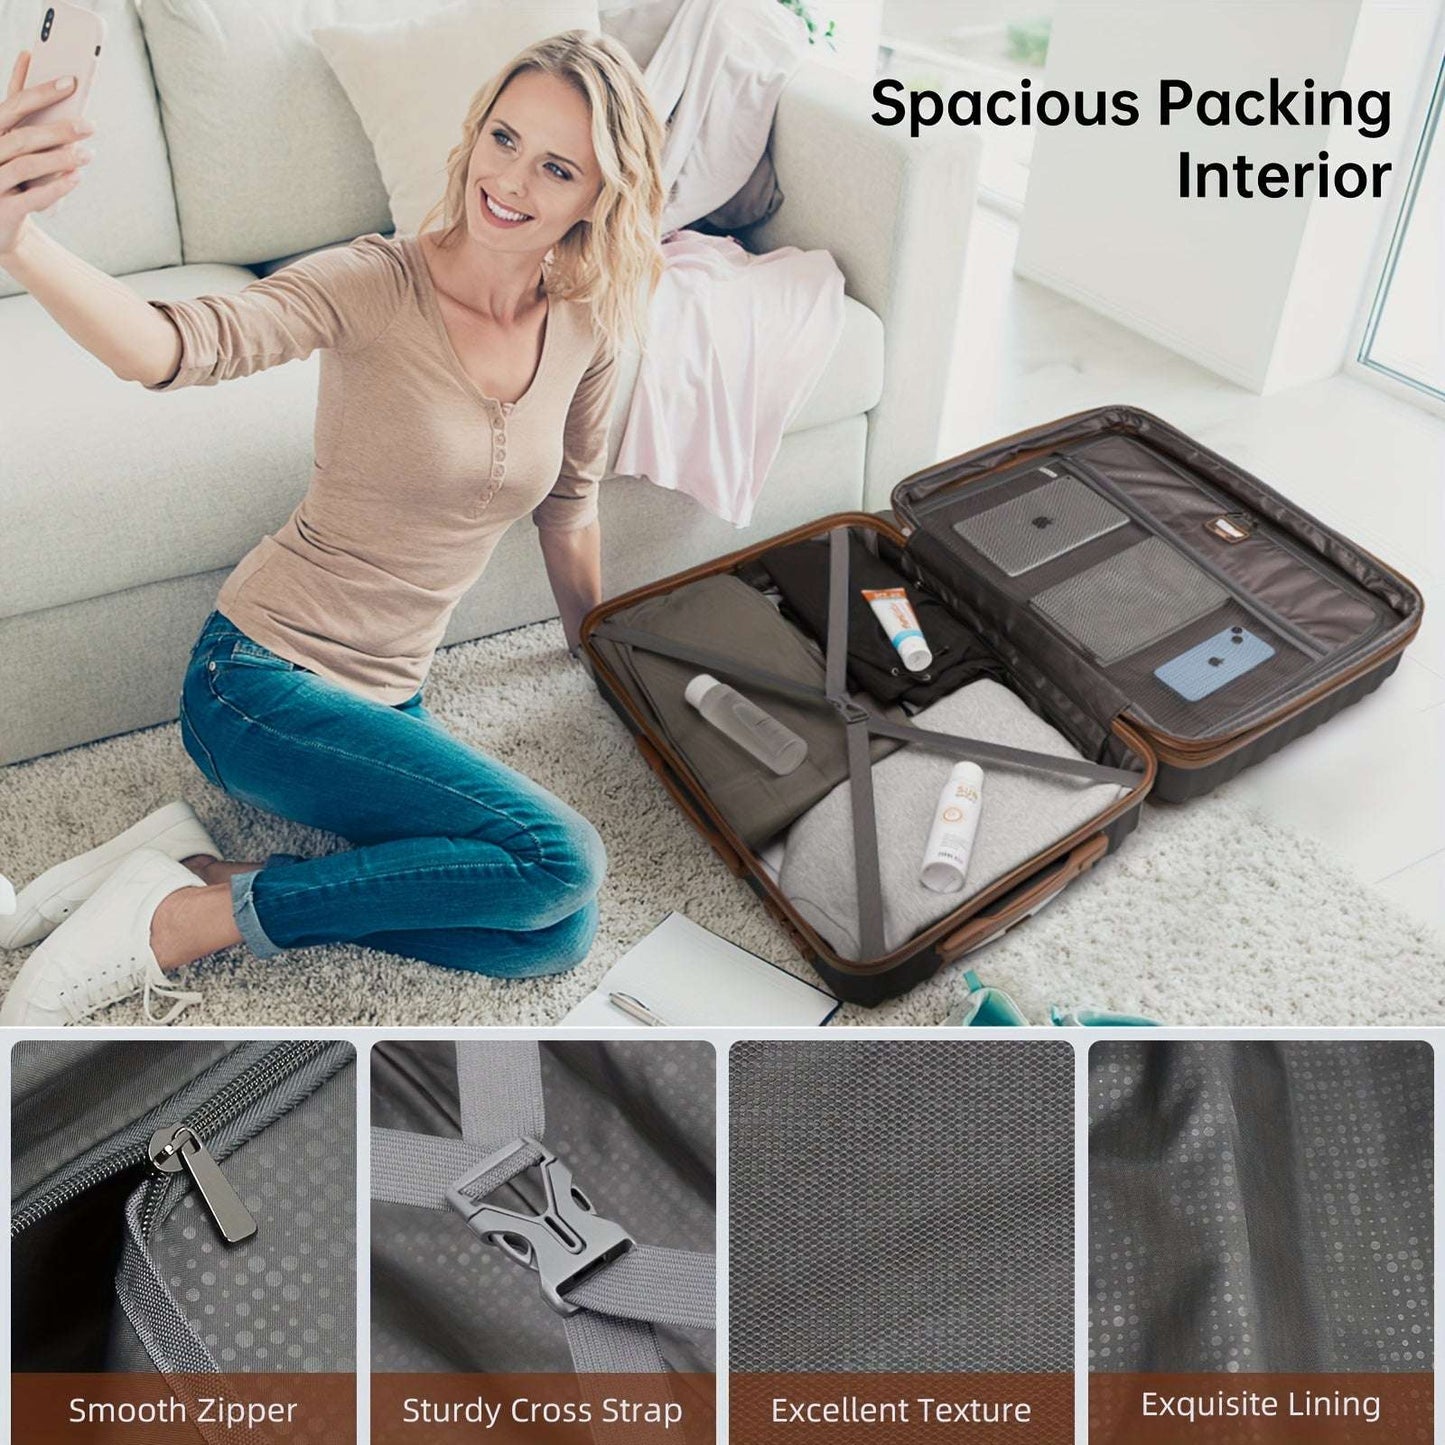 6-Pcs Expandable ABS Suitcase Set - Lightweight, Telescoping Handle, TSA-Approved Lock 206 Luggage OK•PhotoFineArt OK•PhotoFineArt